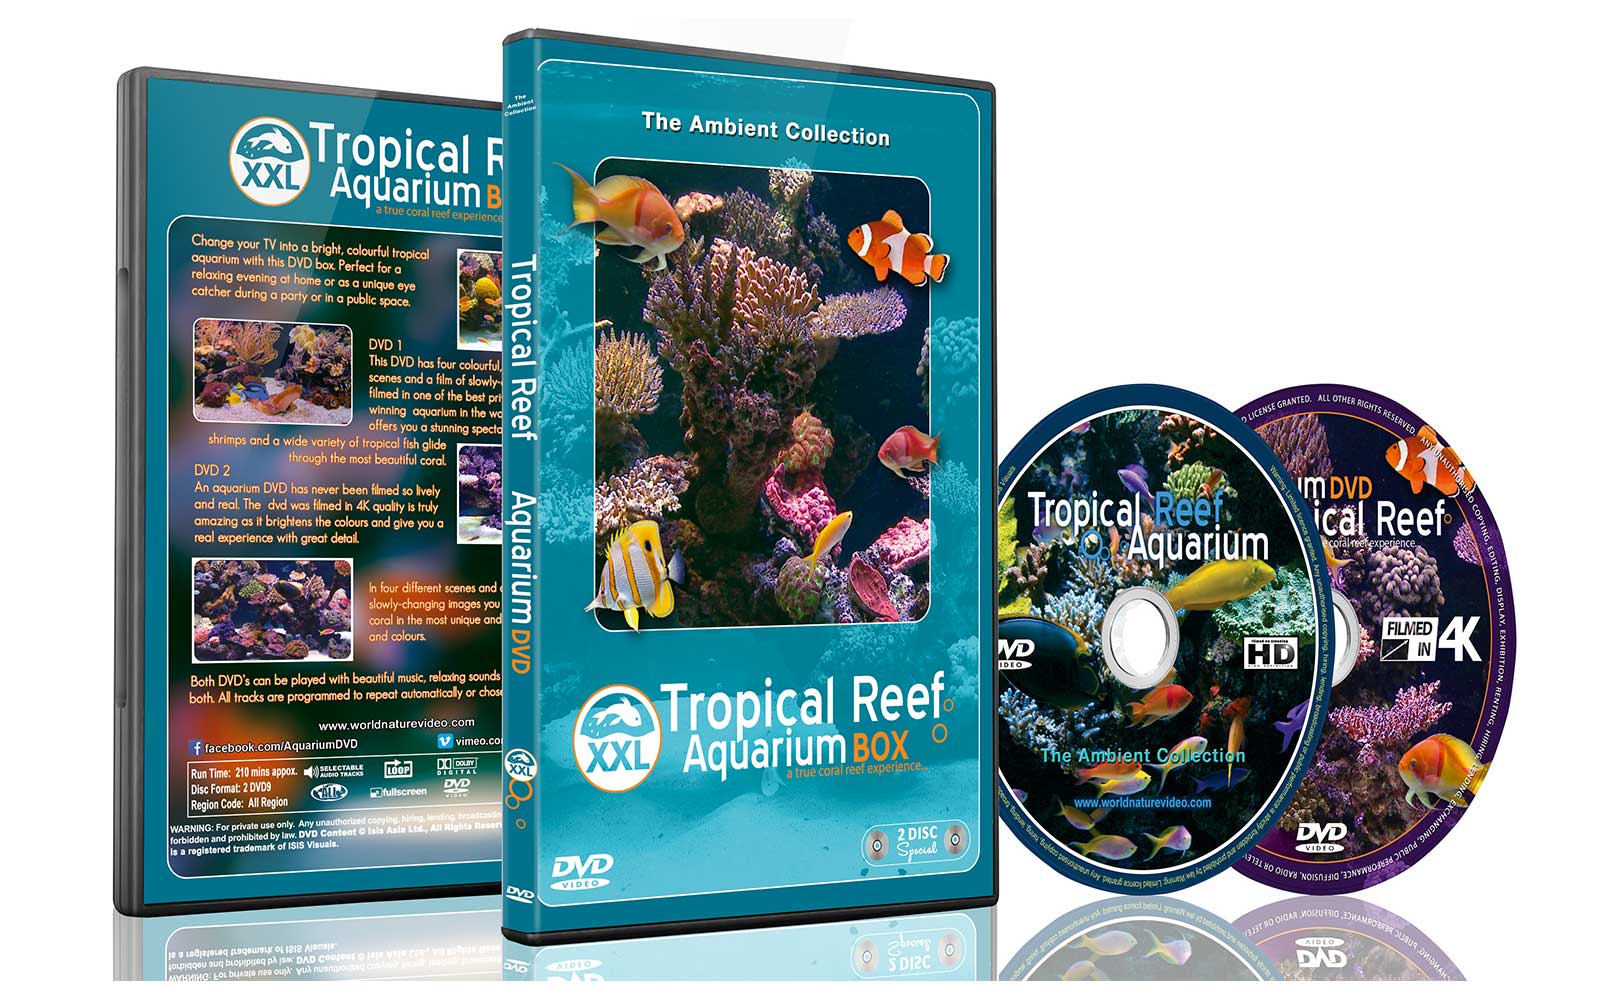 ② DVD FISH TANK — DVD